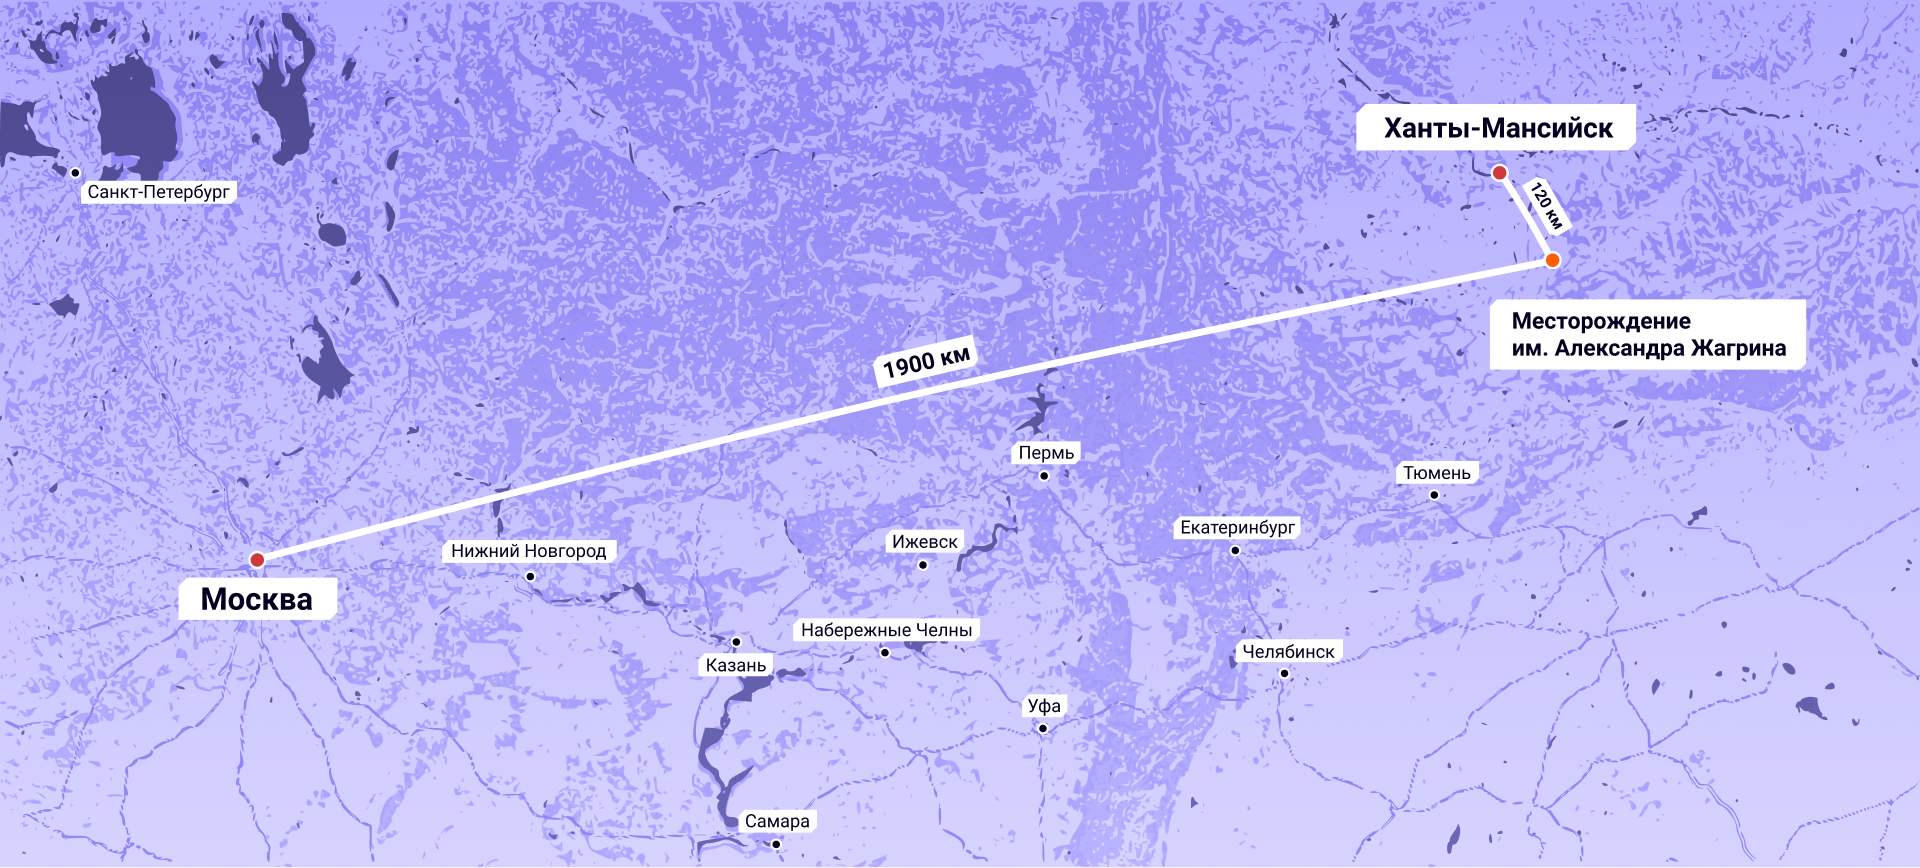 Месторождение имени Жагрина ХМАО на карте. Ханты-Мансийск месторождения Жагрино на карте.